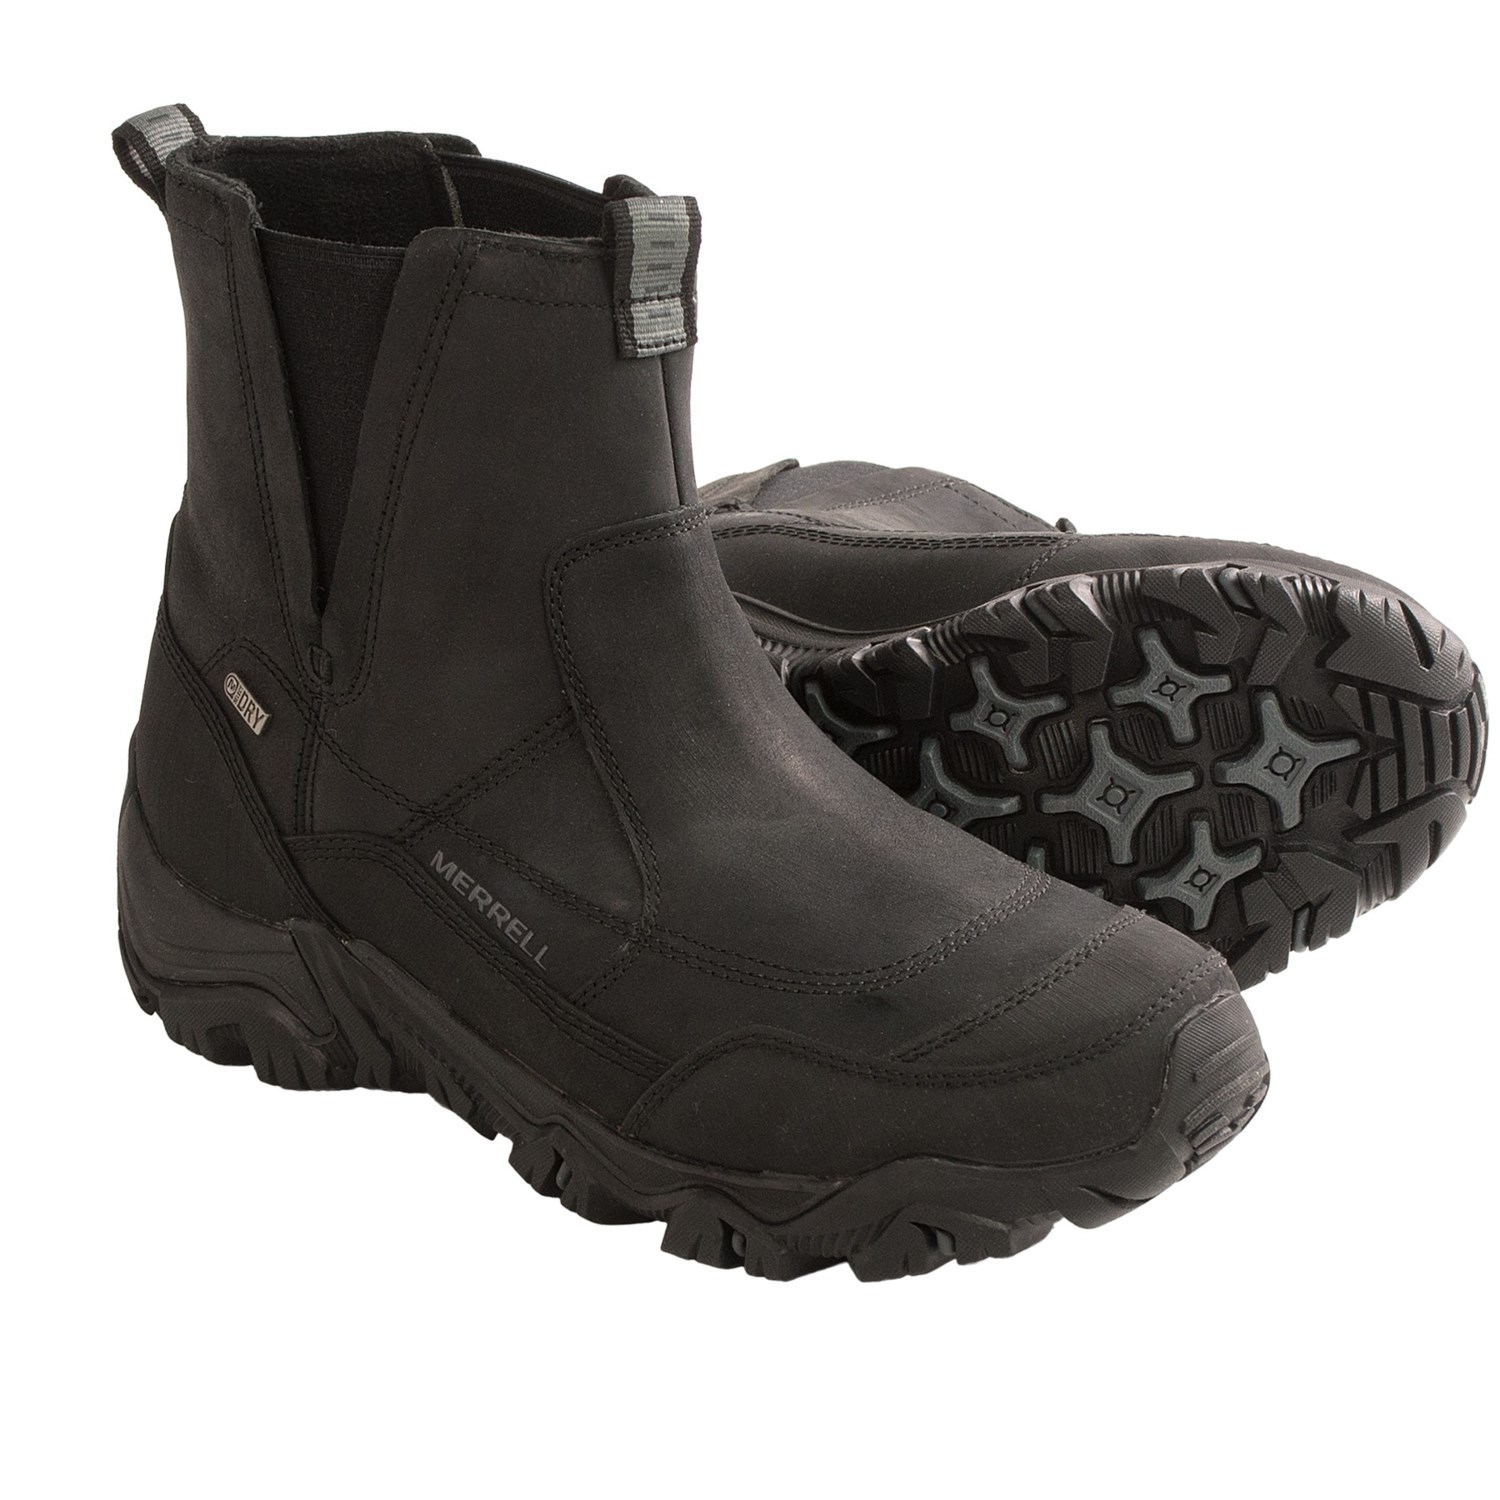 Merrell Polarand Rove Pull Snow Boots - Waterproof (For Men) in Black